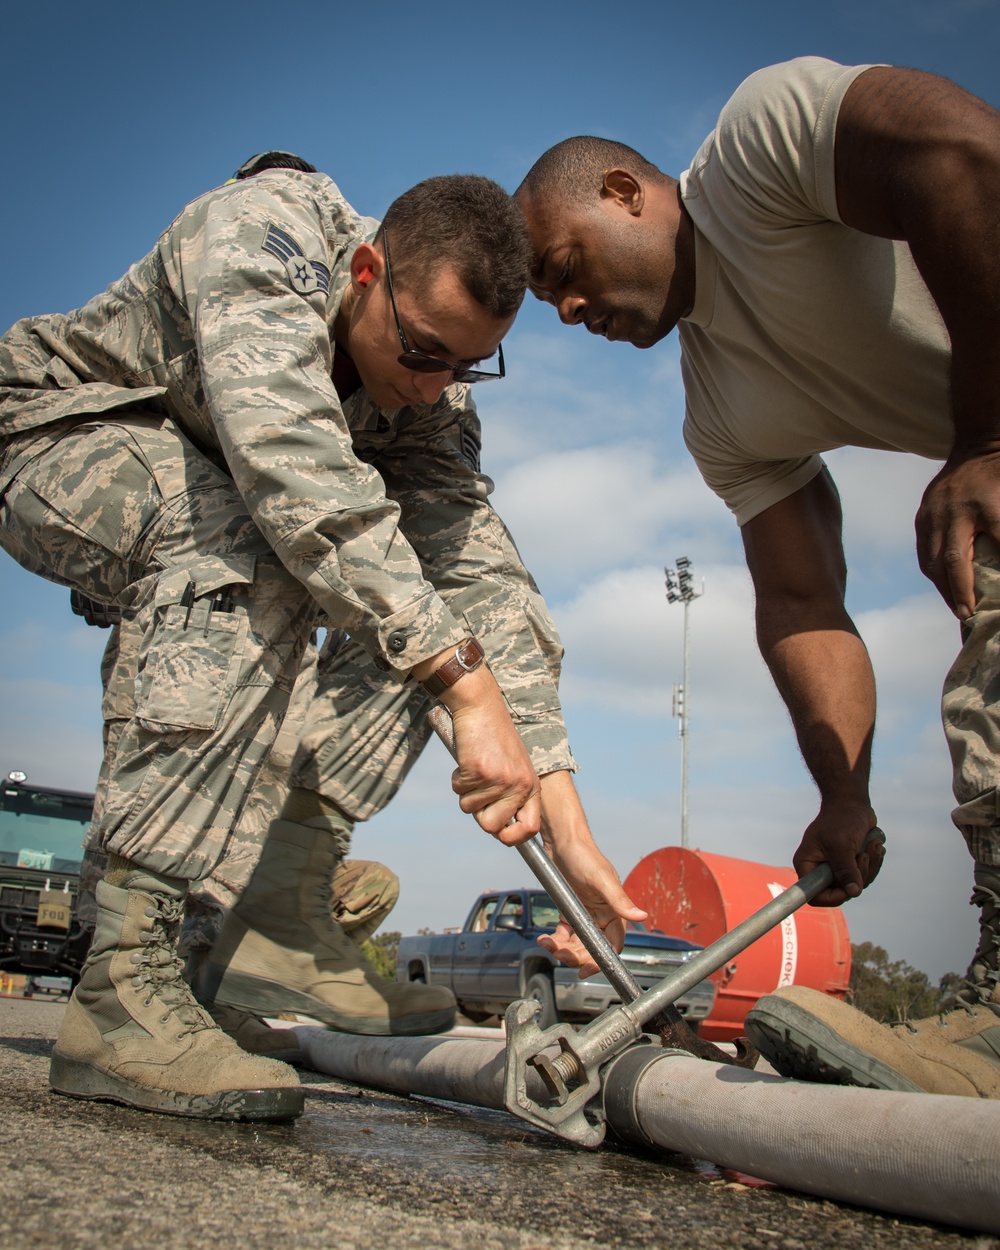 California Air National Guard begin annual aerial fire fighting training